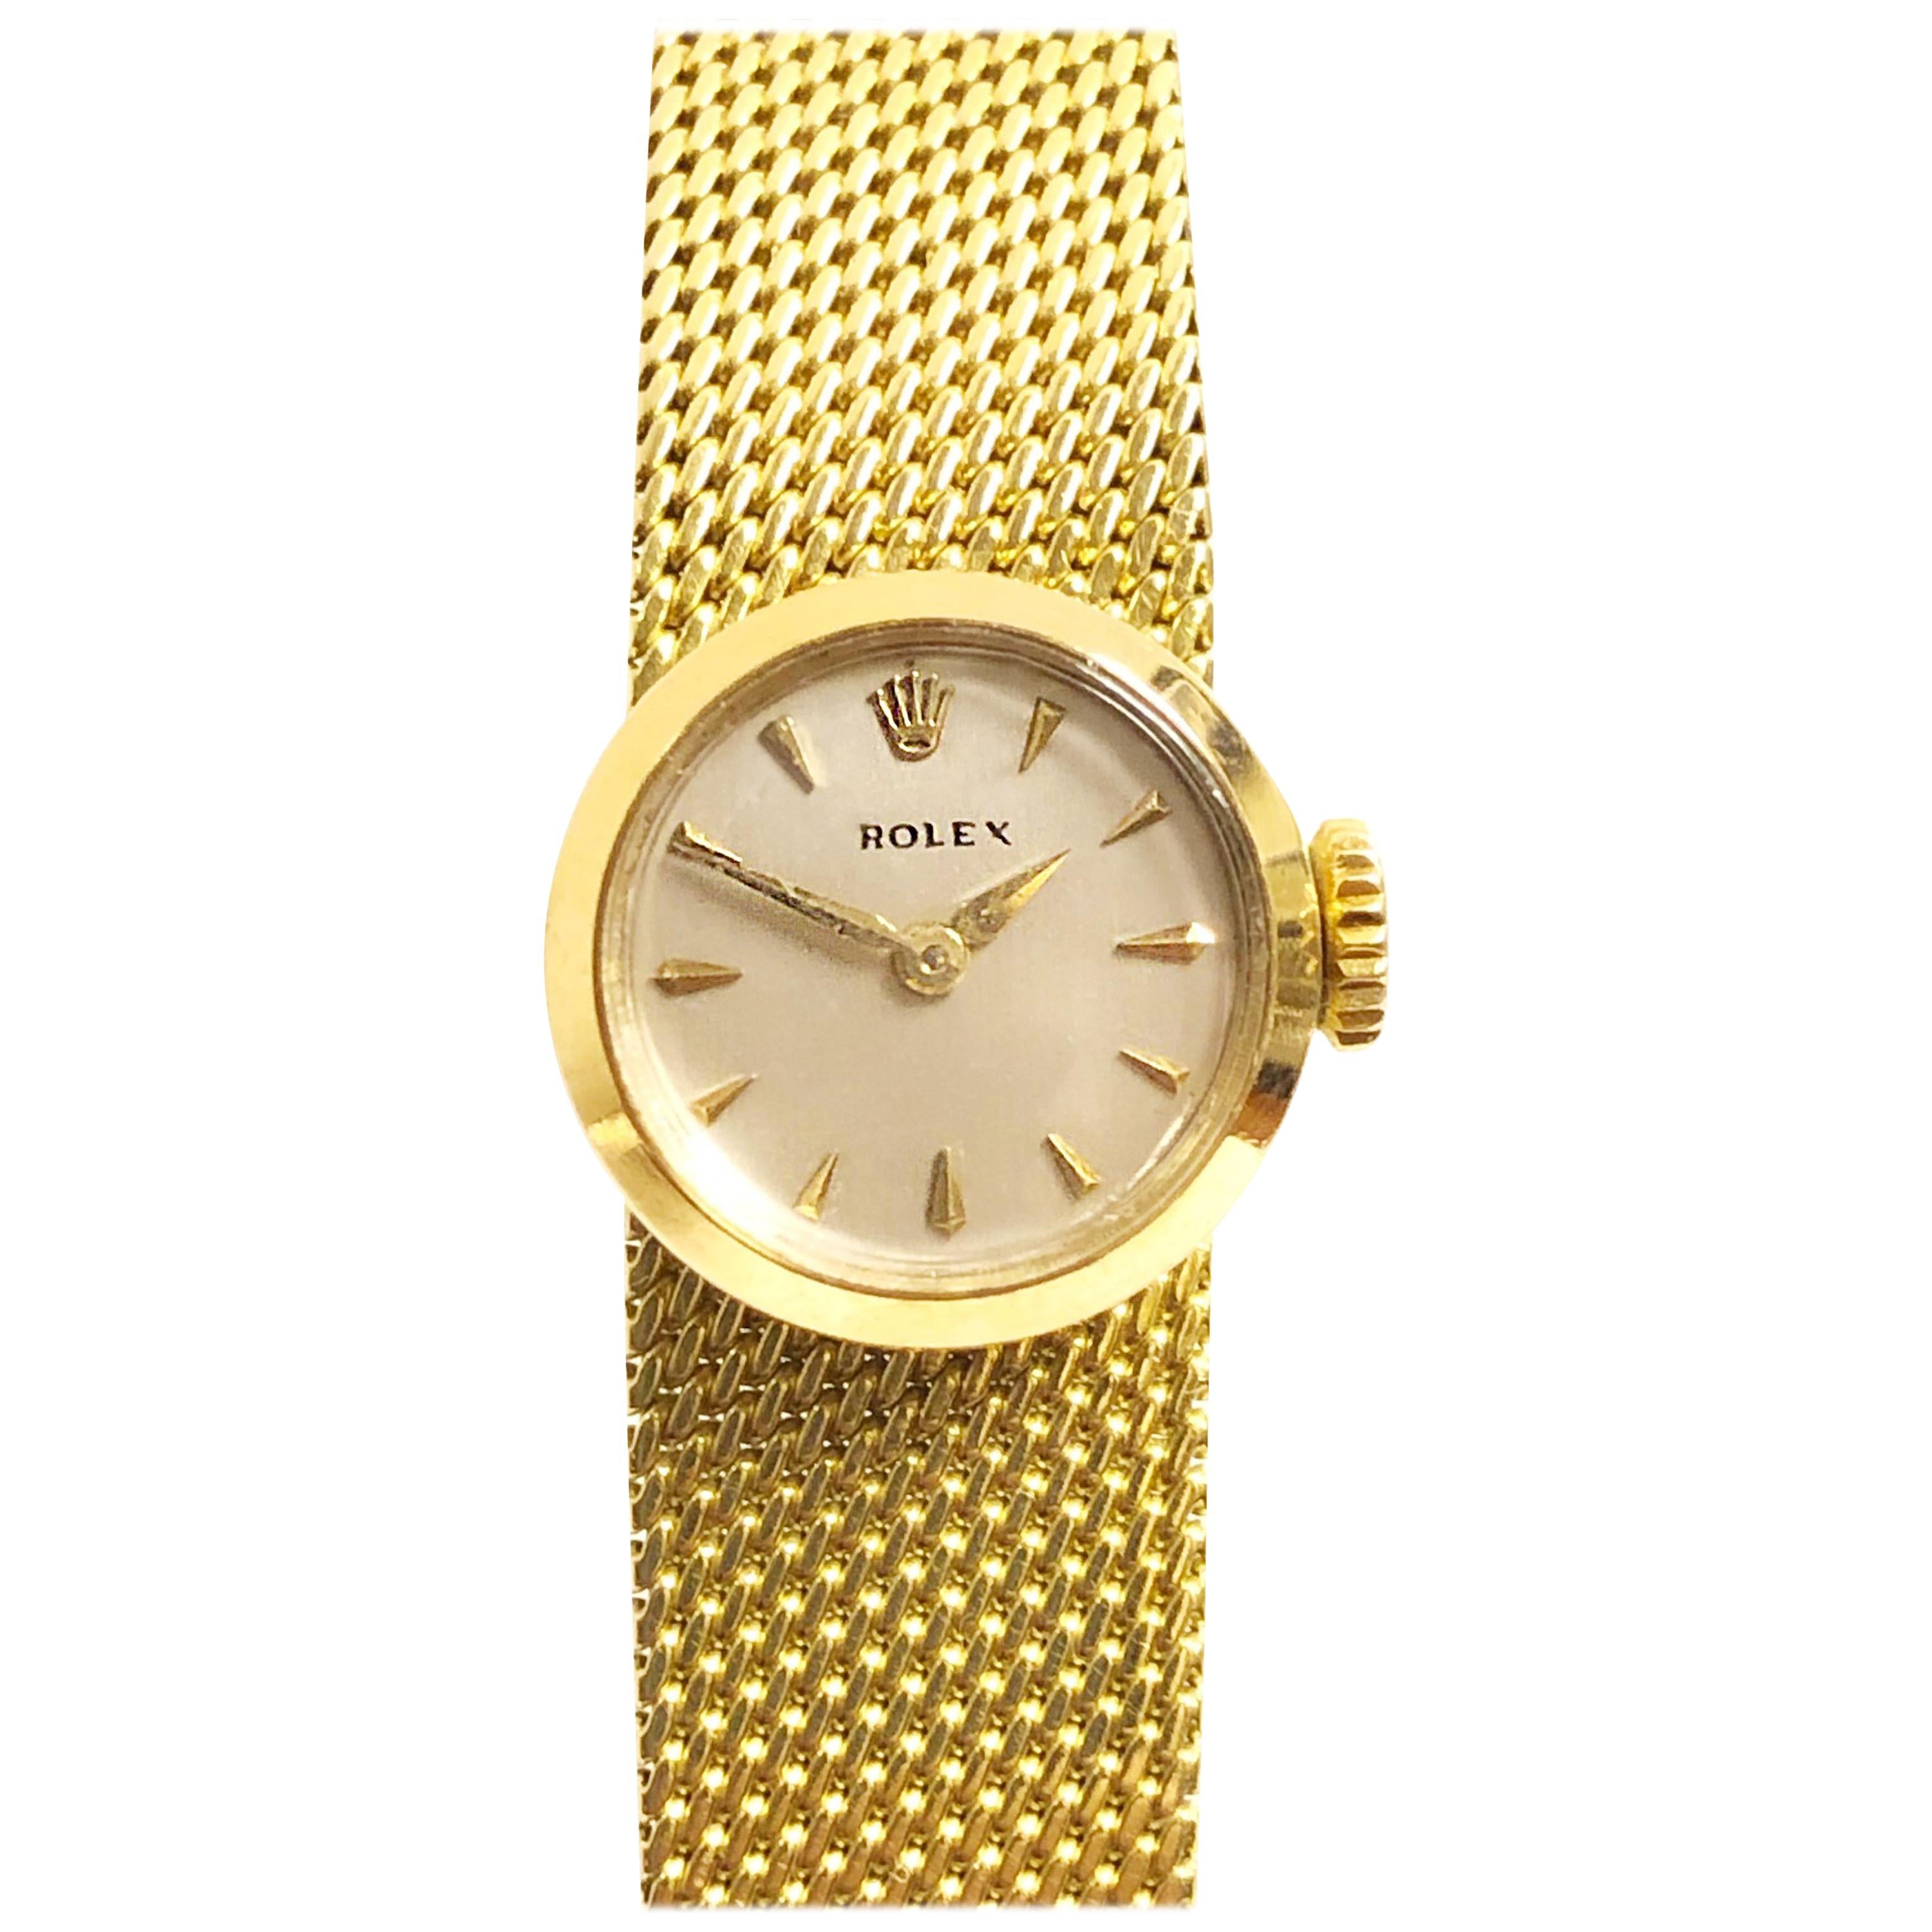 Rolex Orchid Yellow Gold Ladies Bracelet Watch in Original Box